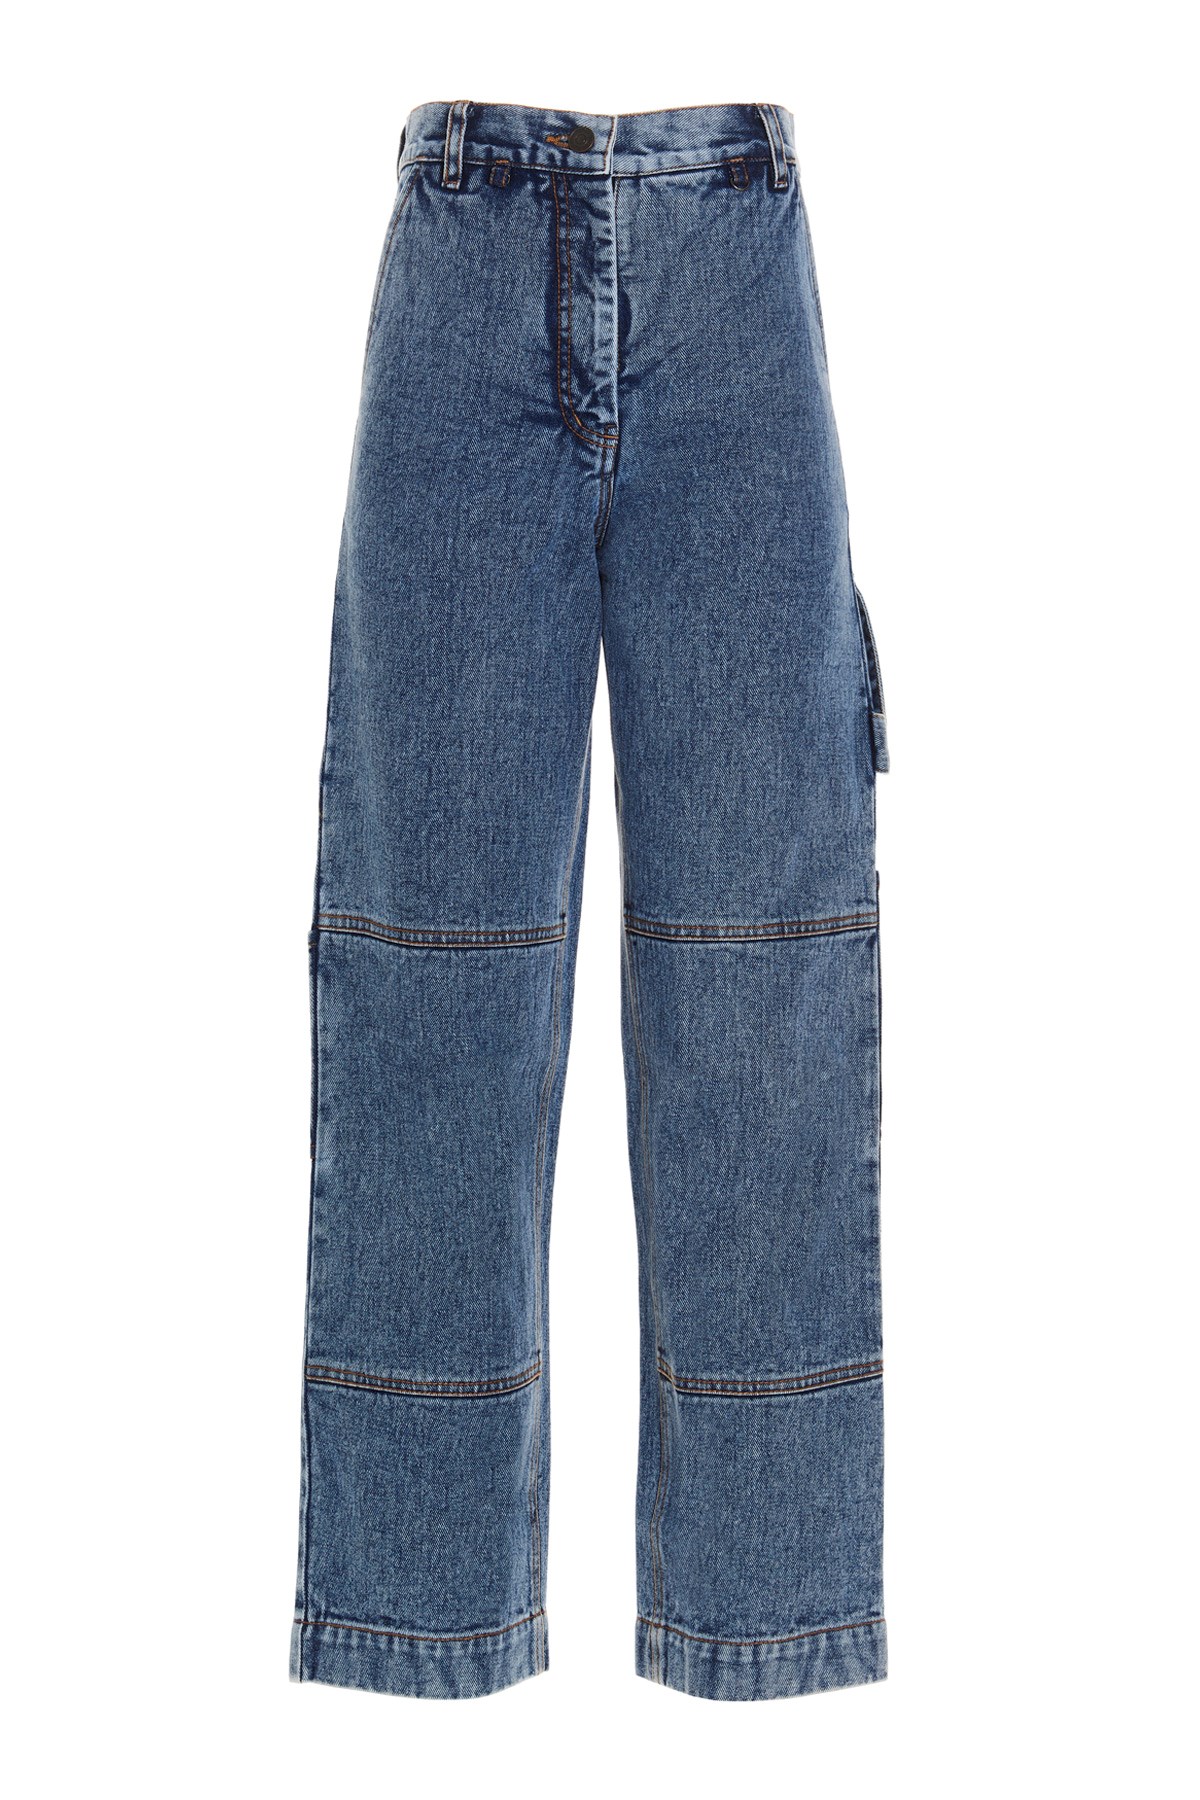 DHRUV KAPOOR 'Carpenter' Jeans